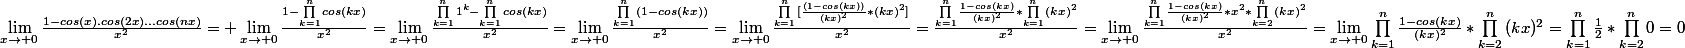 \lim_{x\rightarrow 0}\frac{1-cos(x).cos(2x)...cos(nx)}{x^2}= \lim_{x\rightarrow 0}\frac{1-\prod_{k=1}^{n}{cos(kx)}}{x^2}=\lim_{x\rightarrow 0}\frac{\prod_{k=1}^{n}{1^k}-\prod_{k=1}^{n}{cos(kx)}}{x^2}=\lim_{x\rightarrow 0}\frac{\prod_{k=1}^{n}{(1-cos(kx))}}{x^2}=\lim_{x\rightarrow 0}\frac{\prod_{k=1}^{n}{[\frac{(1-cos(kx))}{(kx)^2}}*(kx)^2]}{x^2}=\frac{\prod_{k=1}^{n}{\frac{1-cos(kx)}{(kx)^2}}*\prod_{k=1}^{n}{(kx)^2}}{x^2}=\lim_{x\rightarrow 0}\frac{\prod_{k=1}^{n}{\frac{1-cos(kx)}{(kx)^2}}*x^2*\prod_{k=2}^{n}{(kx)^2}}{x^2}=\lim_{x\rightarrow 0}\prod_{k=1}^{n}{\frac{1-cos(kx)}{(kx)^2}}*\prod_{k=2}^{n}{(kx)^2}=\prod_{k=1}^{n}{\frac{1}{2}}*\prod_{k=2}^{n}{0}=0